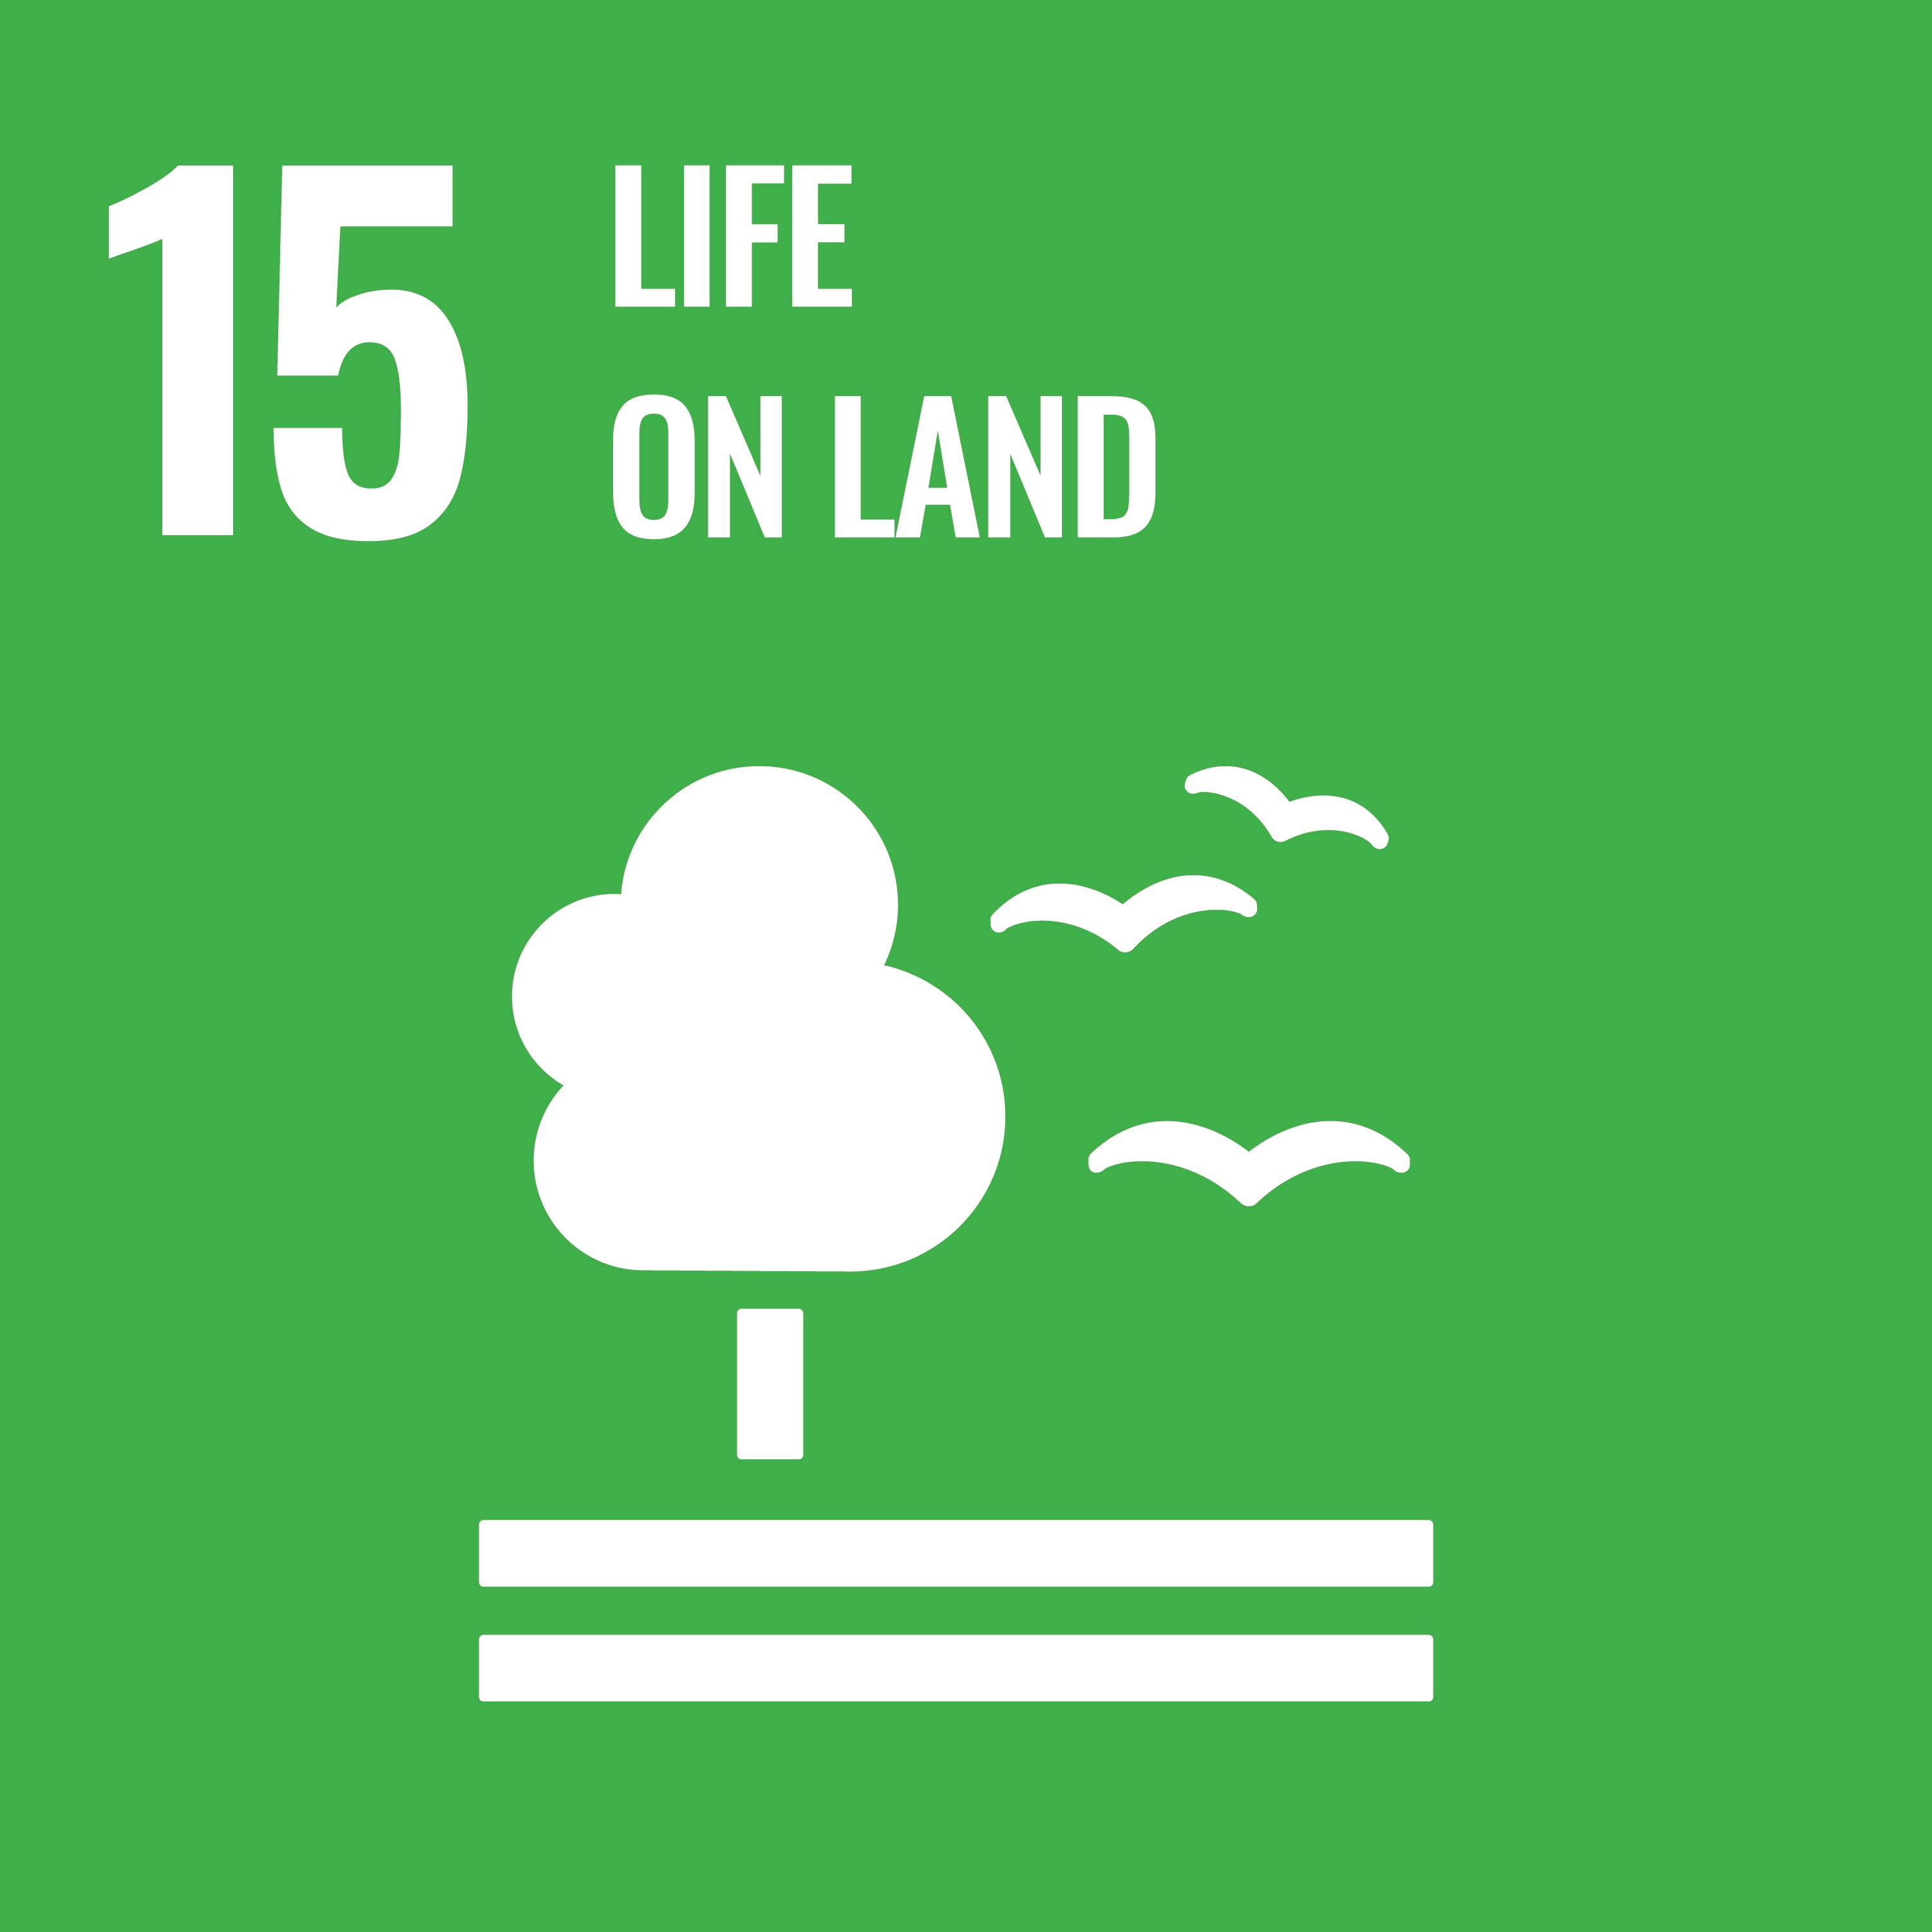 UN Sustainable Development Goals 15 - Life on Land